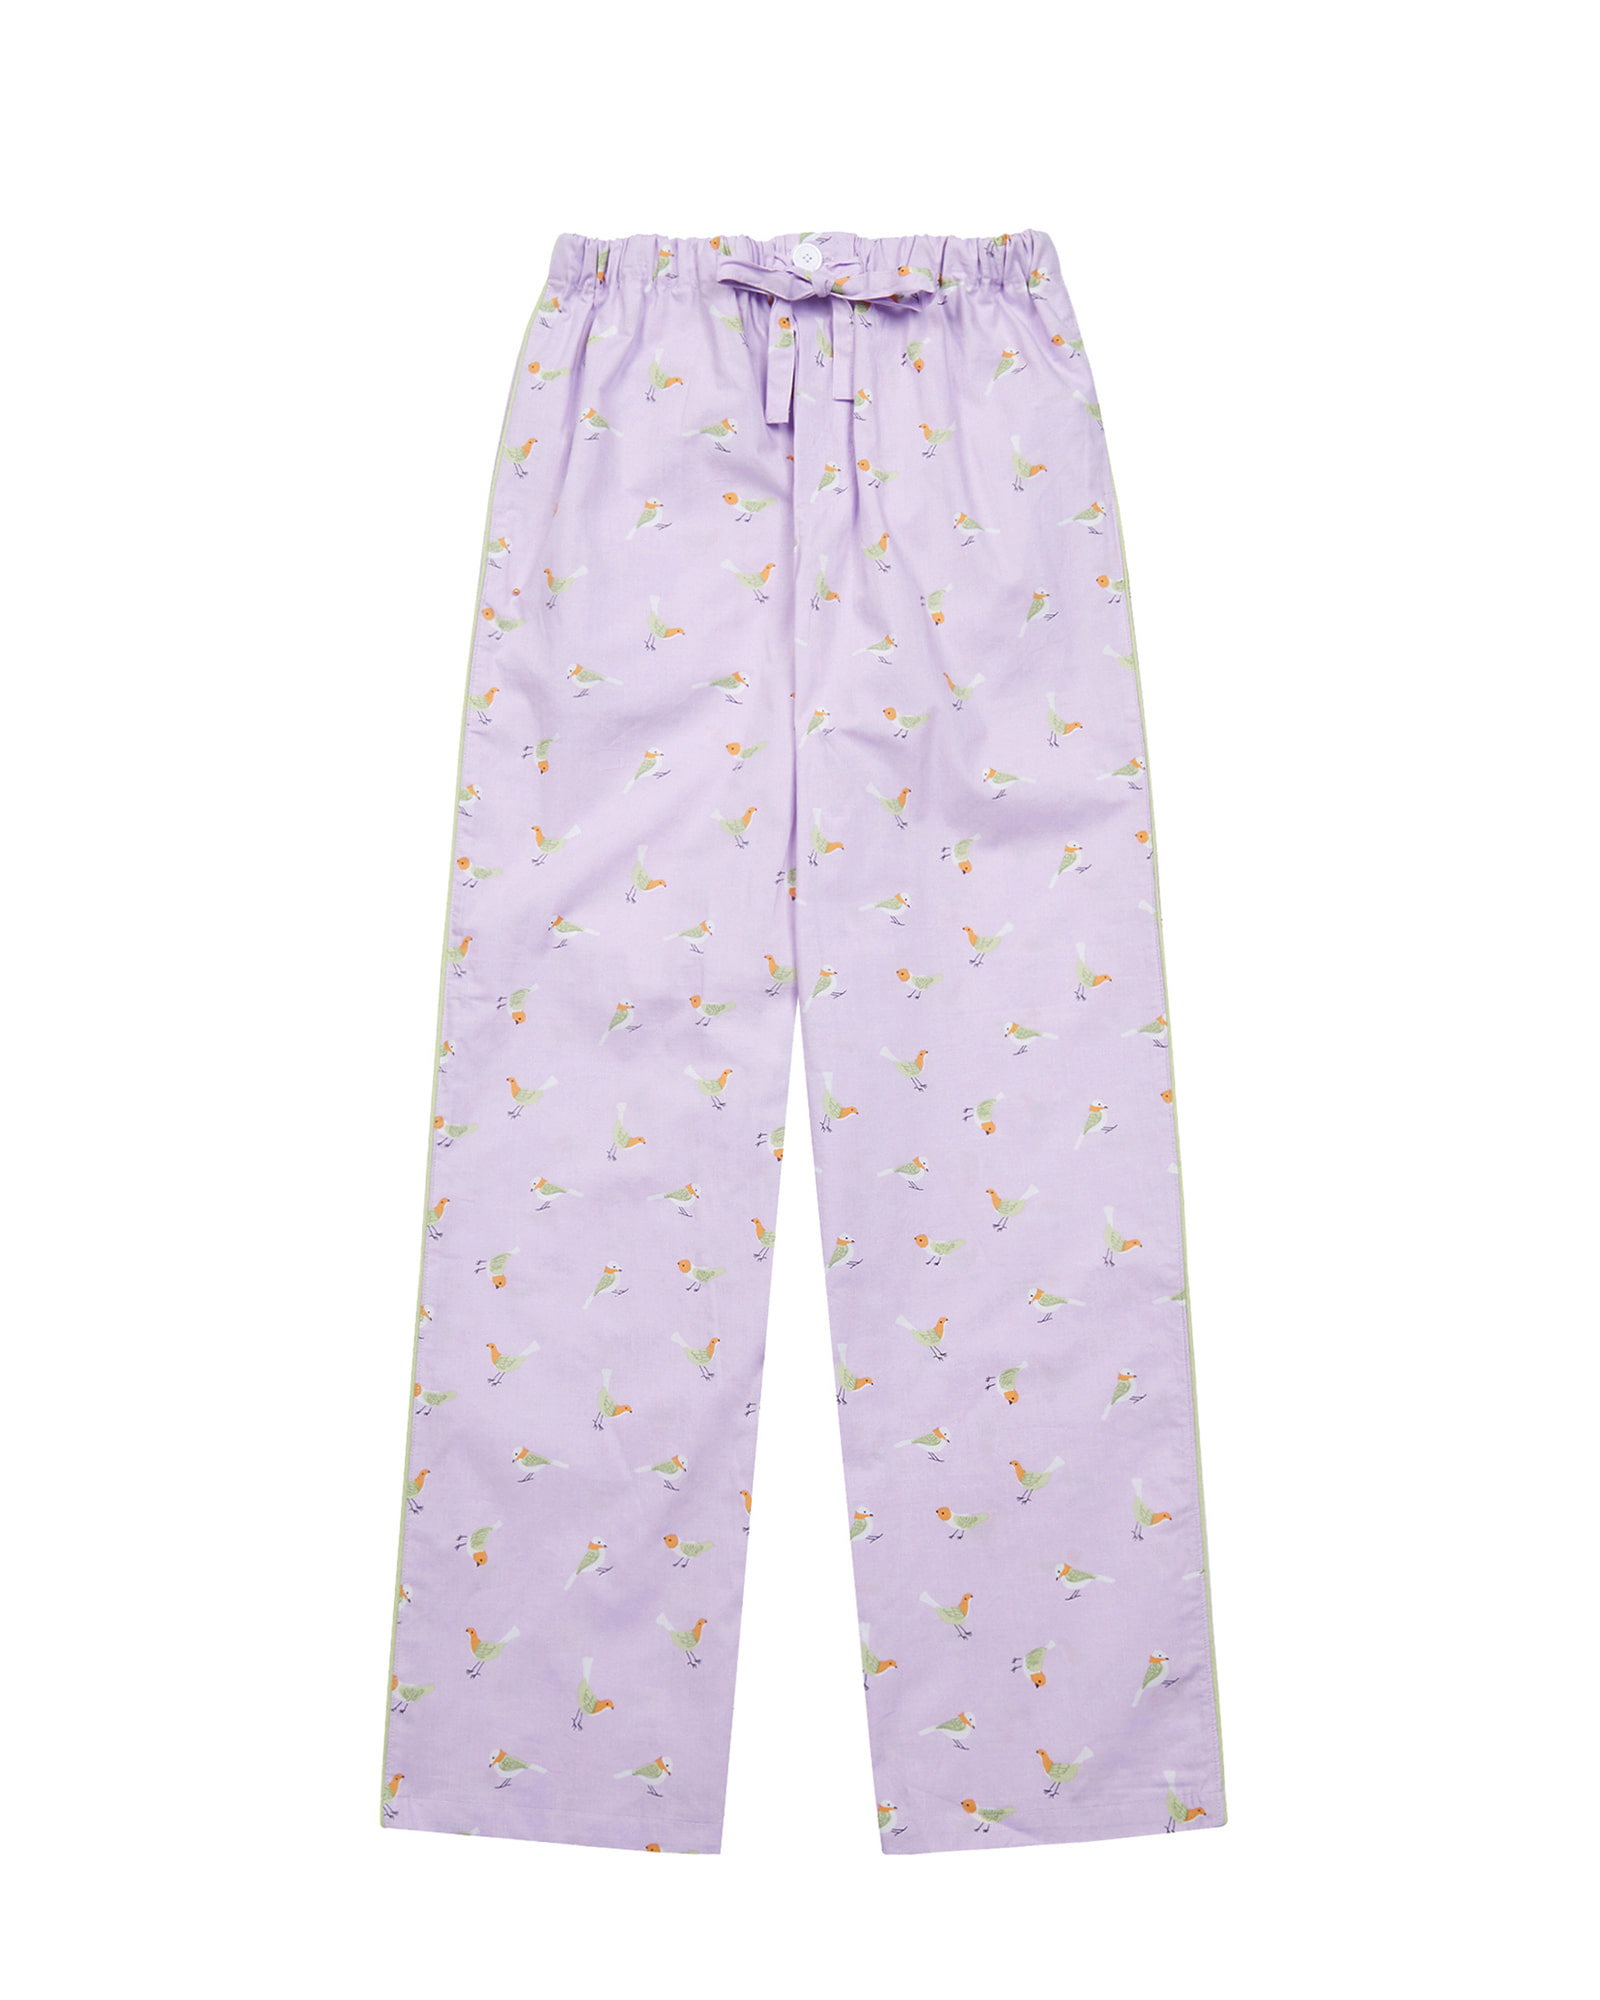 Buddy Robin Pajama Set (Cloud Purple)